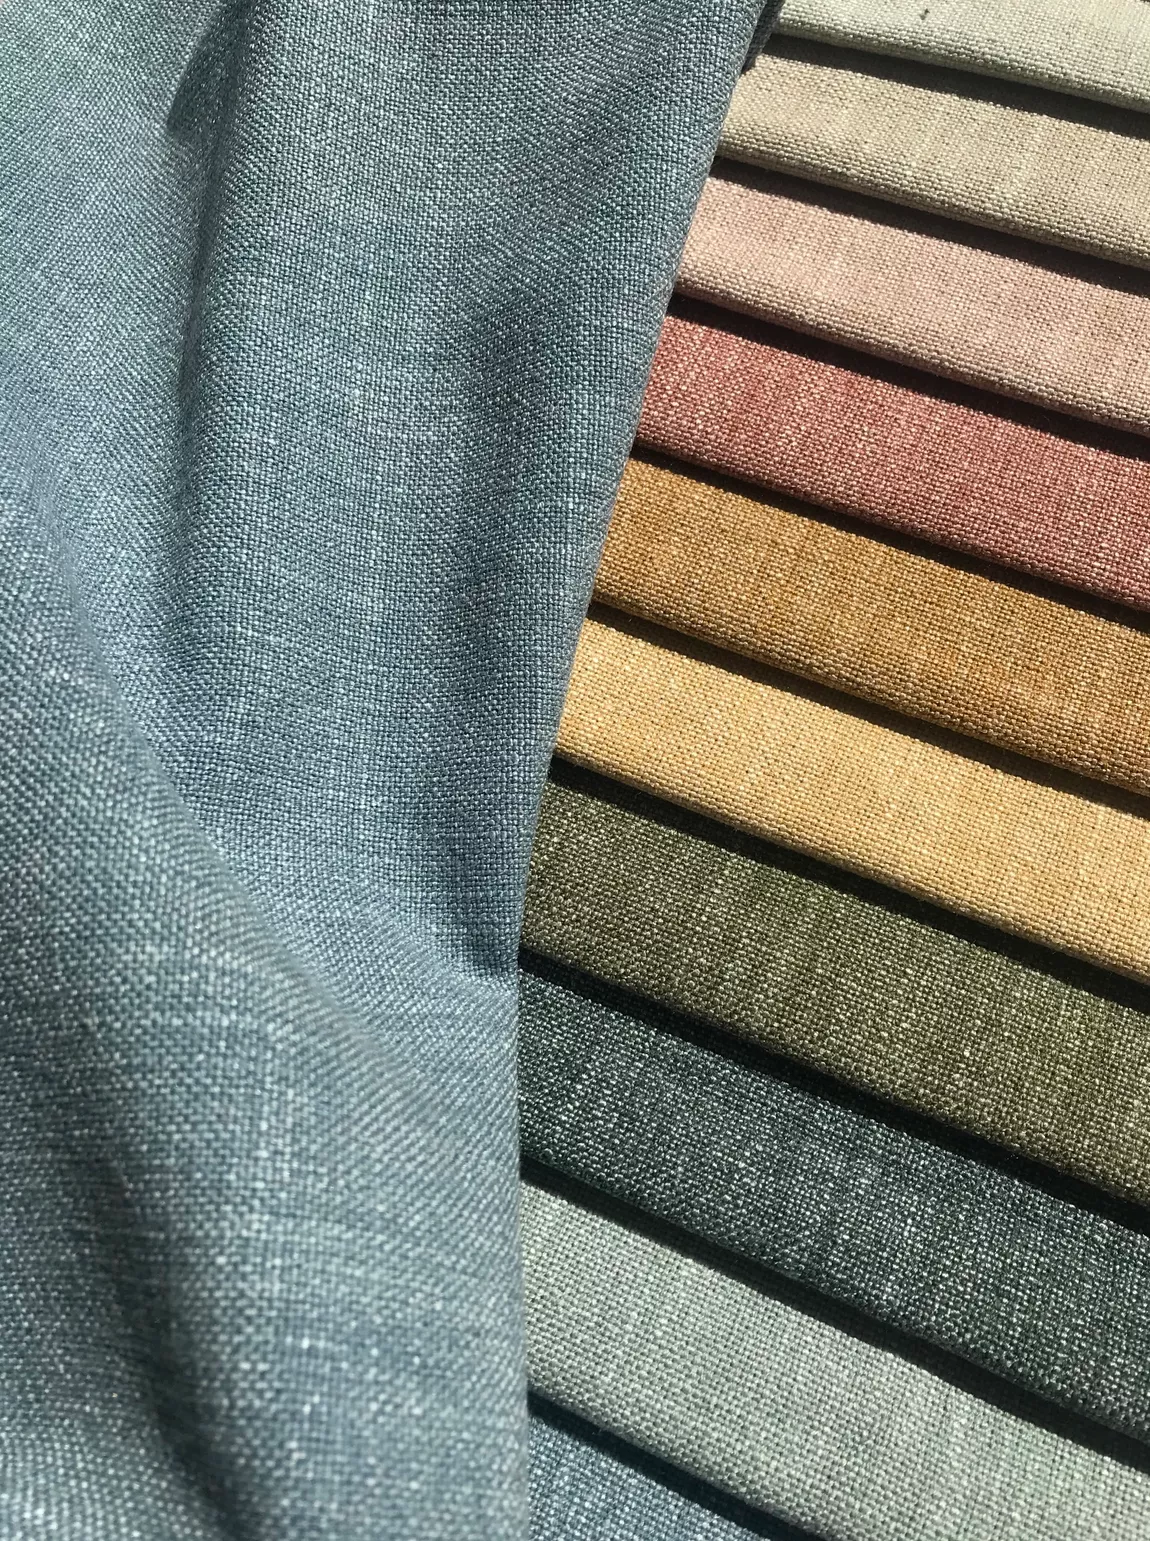 Warwick Fabrics - Eames